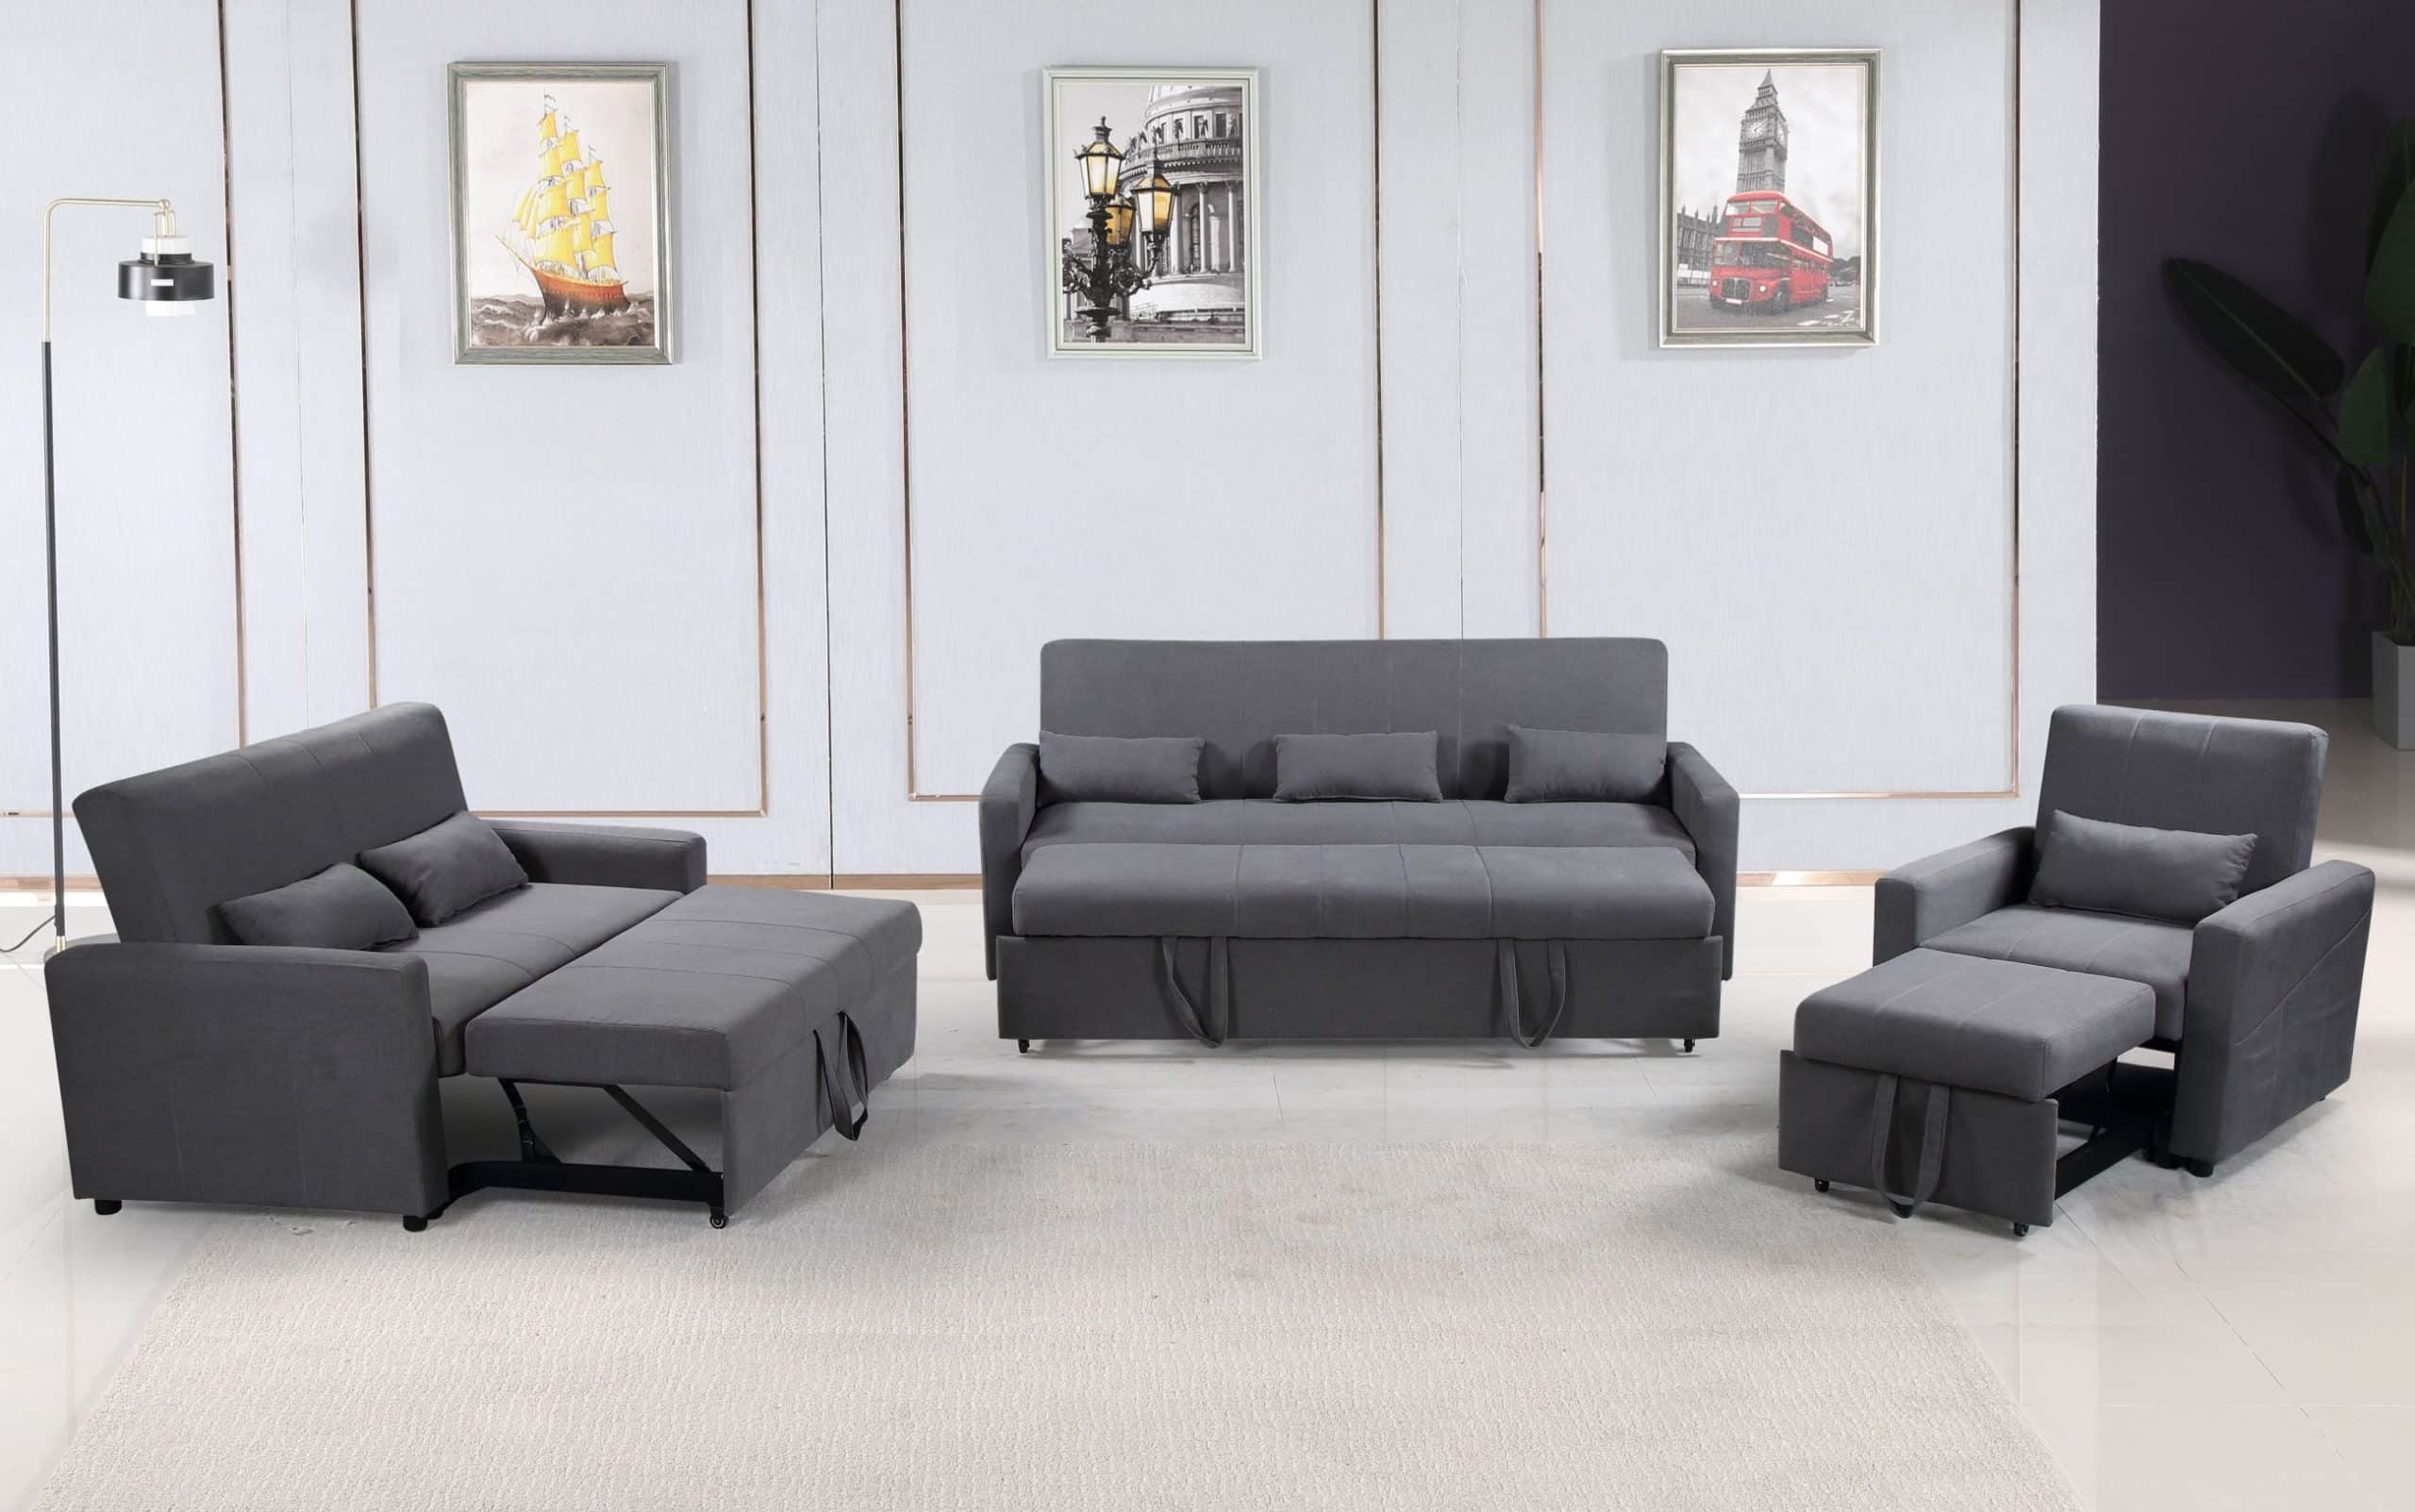 HS1009- Charcoal - Husky Furniture Transformer - convertible Sofa Bed - 3PC set